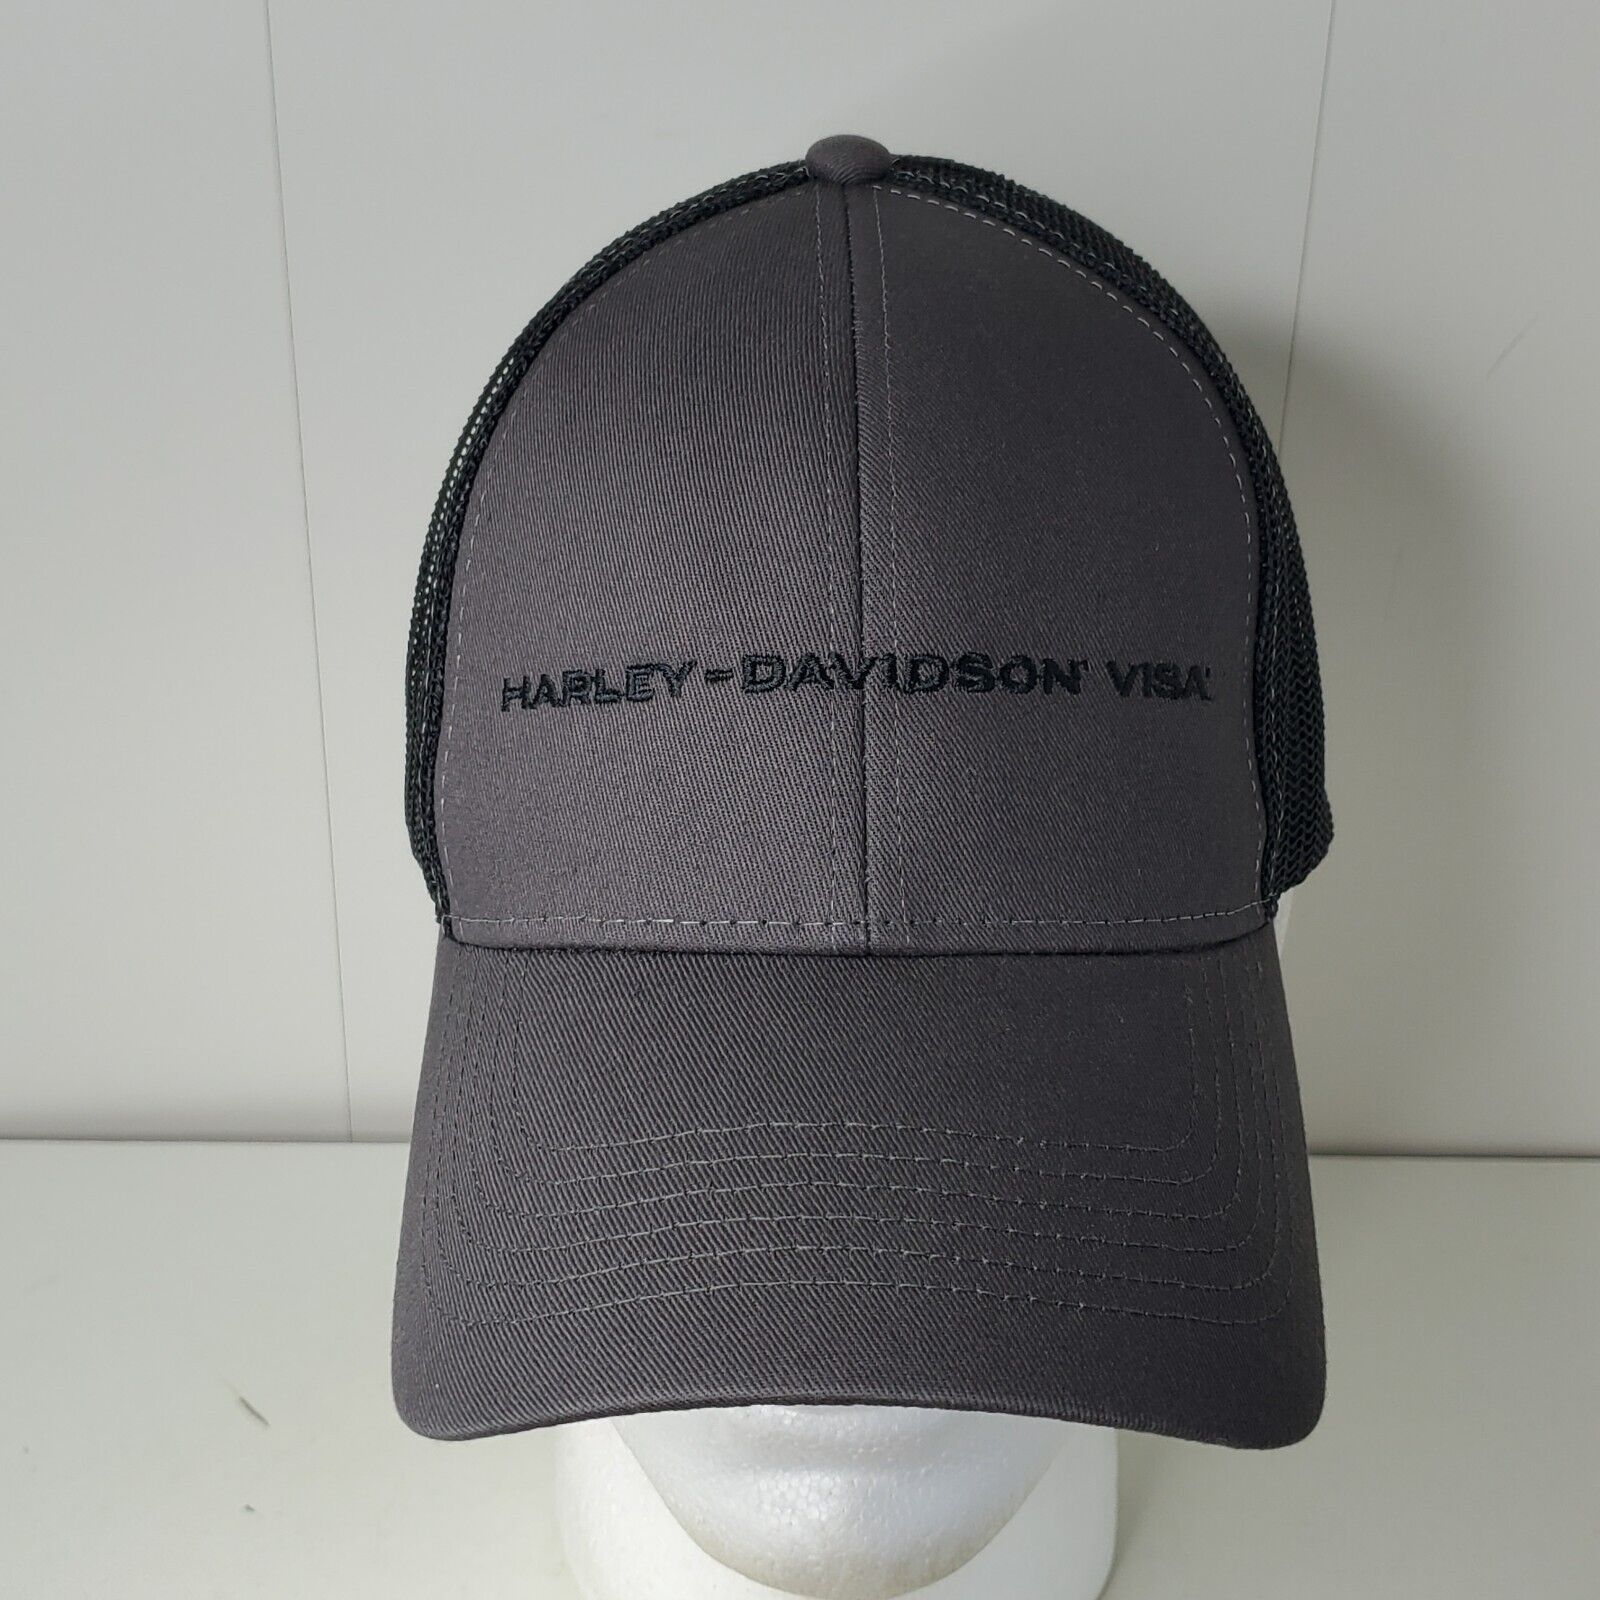 Harley-Davidson Visa Snapback Cap Mesh Trucker Cap Embroidered Spelled Out Logo